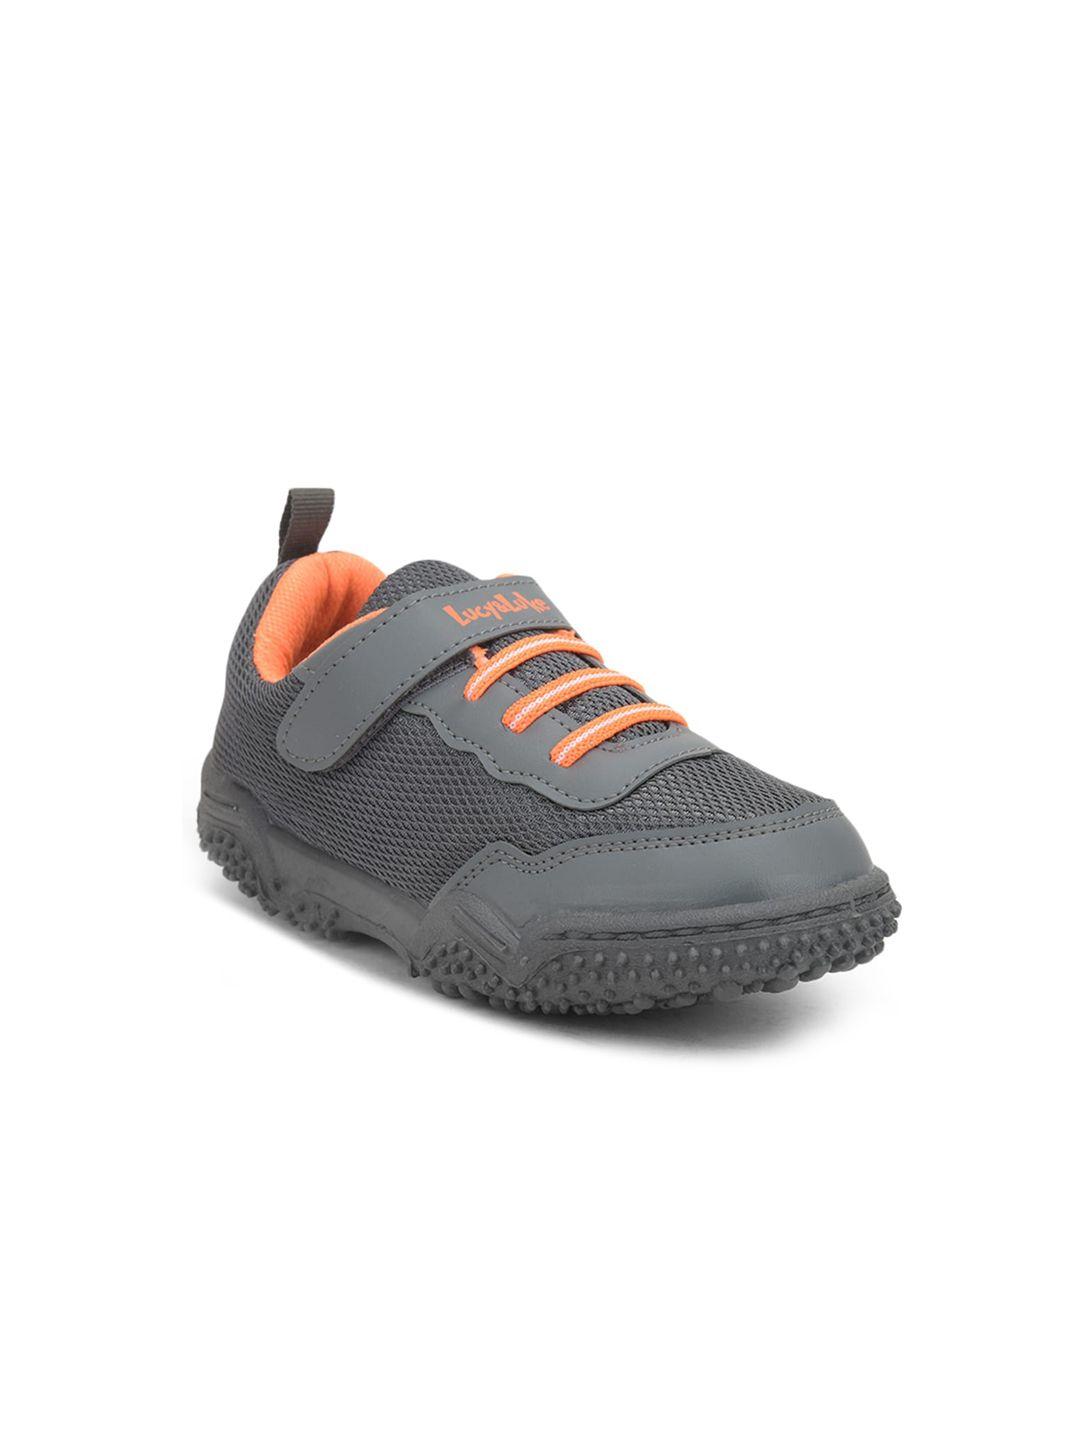 liberty boys grey & orange solid casual sneakers